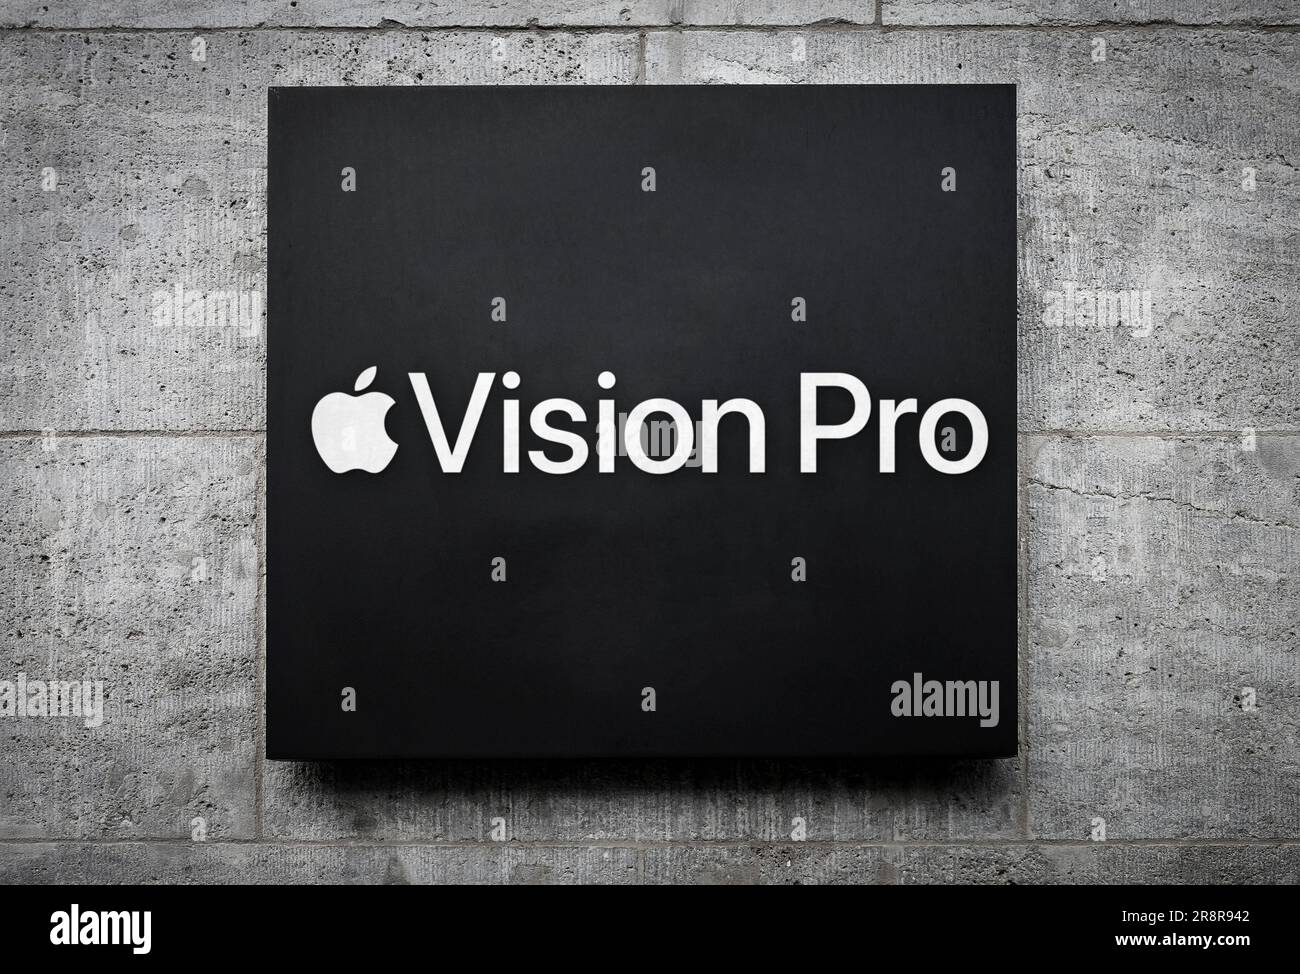 Apple Vision Pro technology Stock Photo